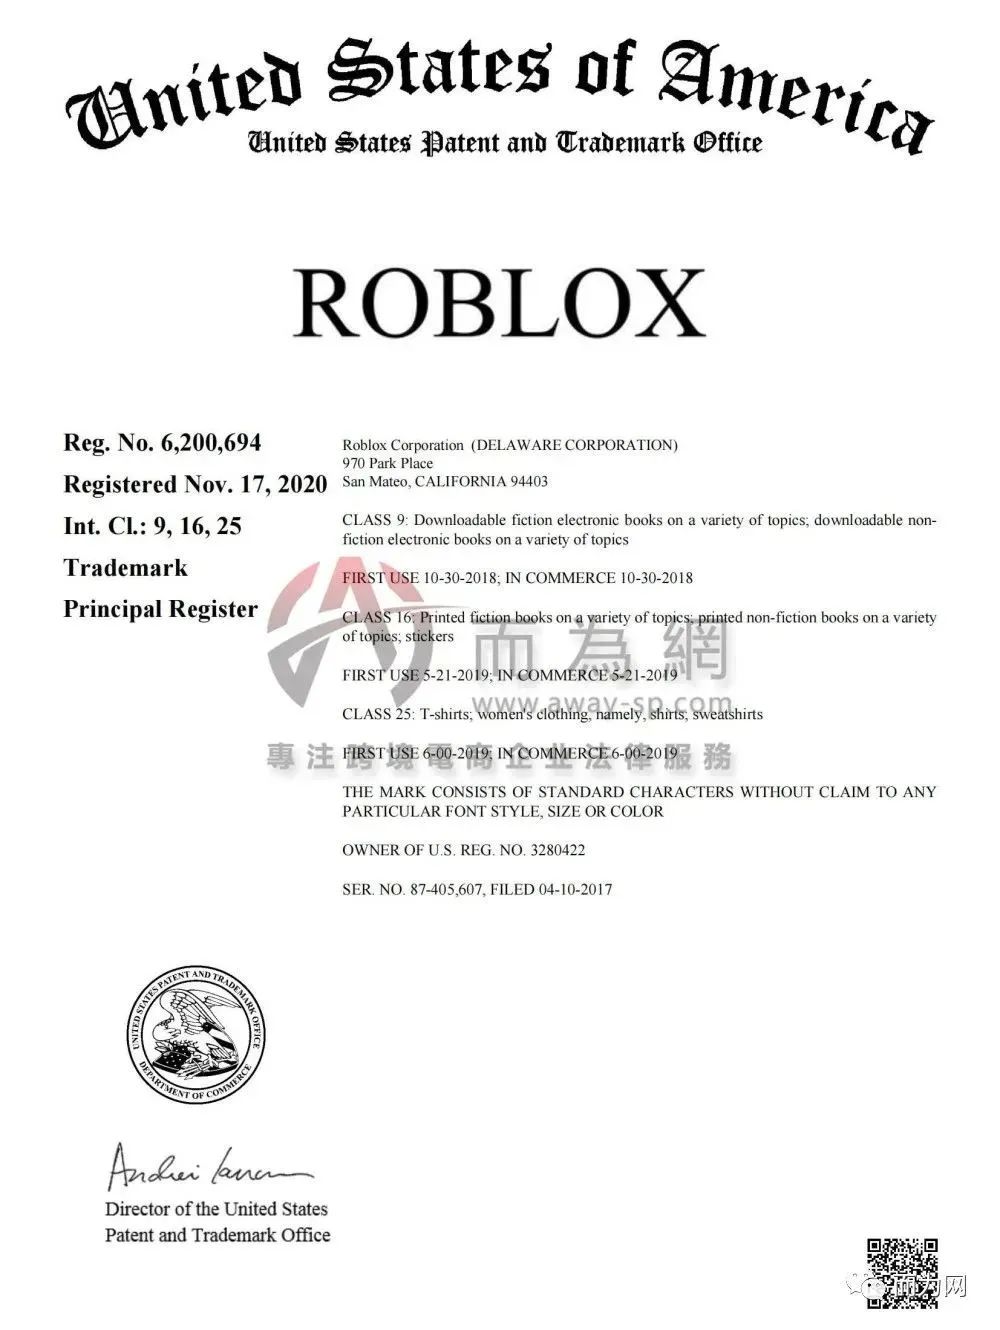 30 个Roblox Logos 点子